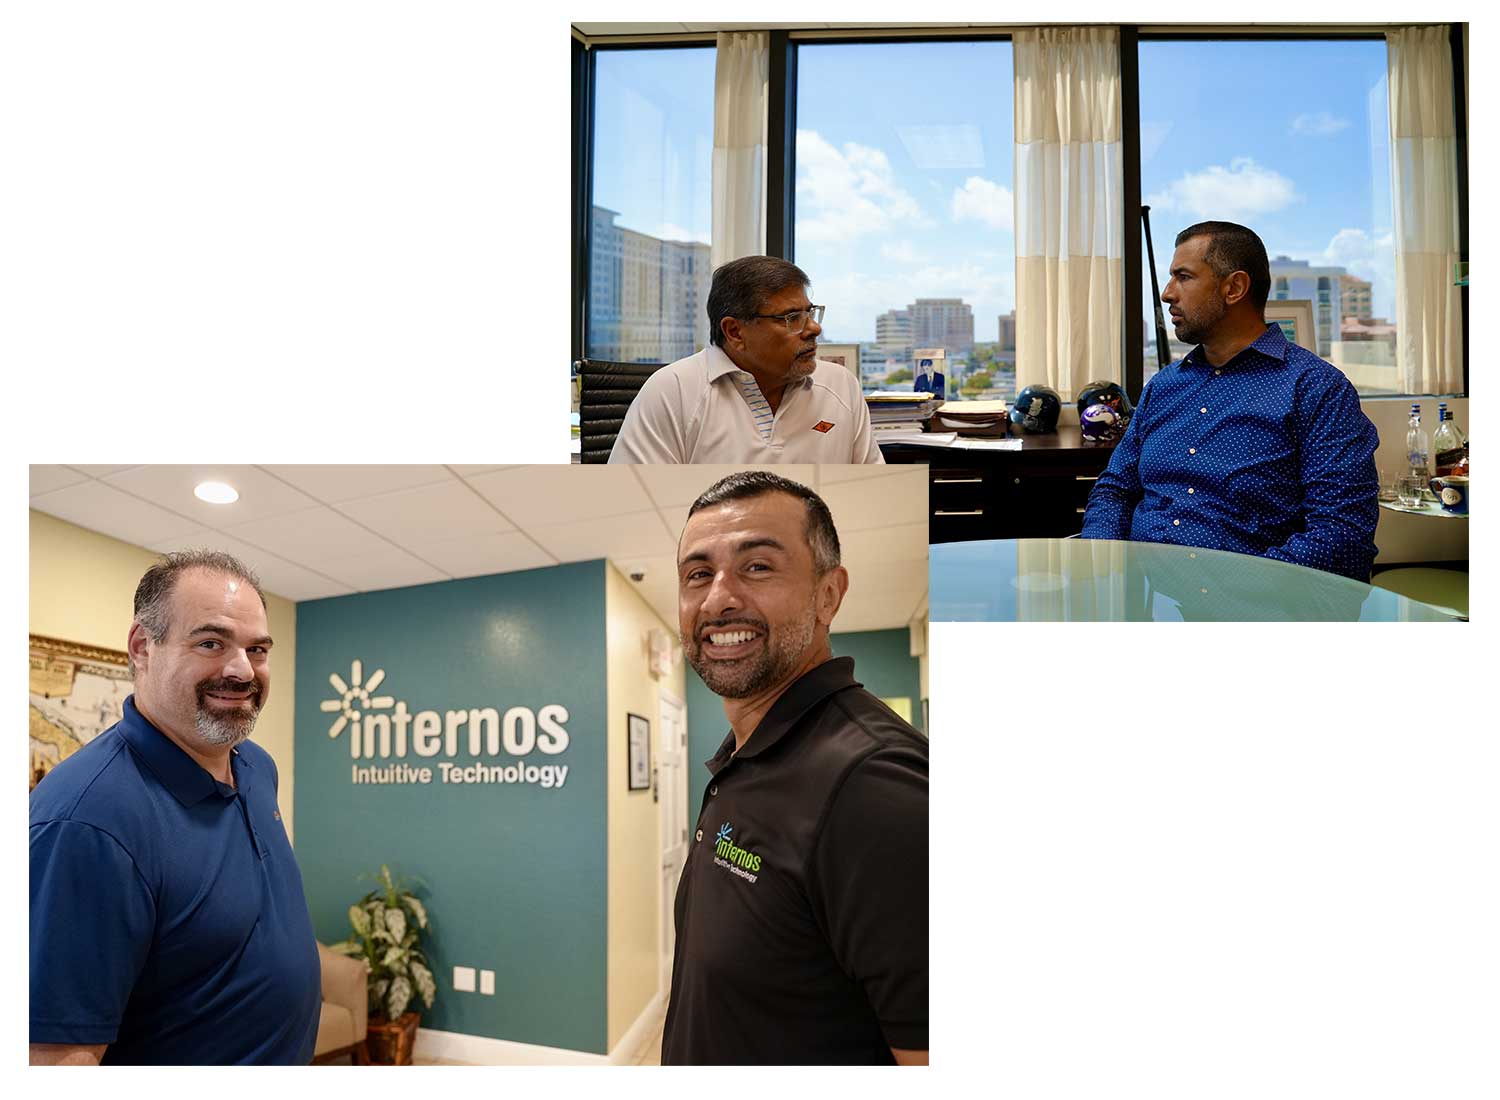 Internos Miami IT Support Office Support Staff